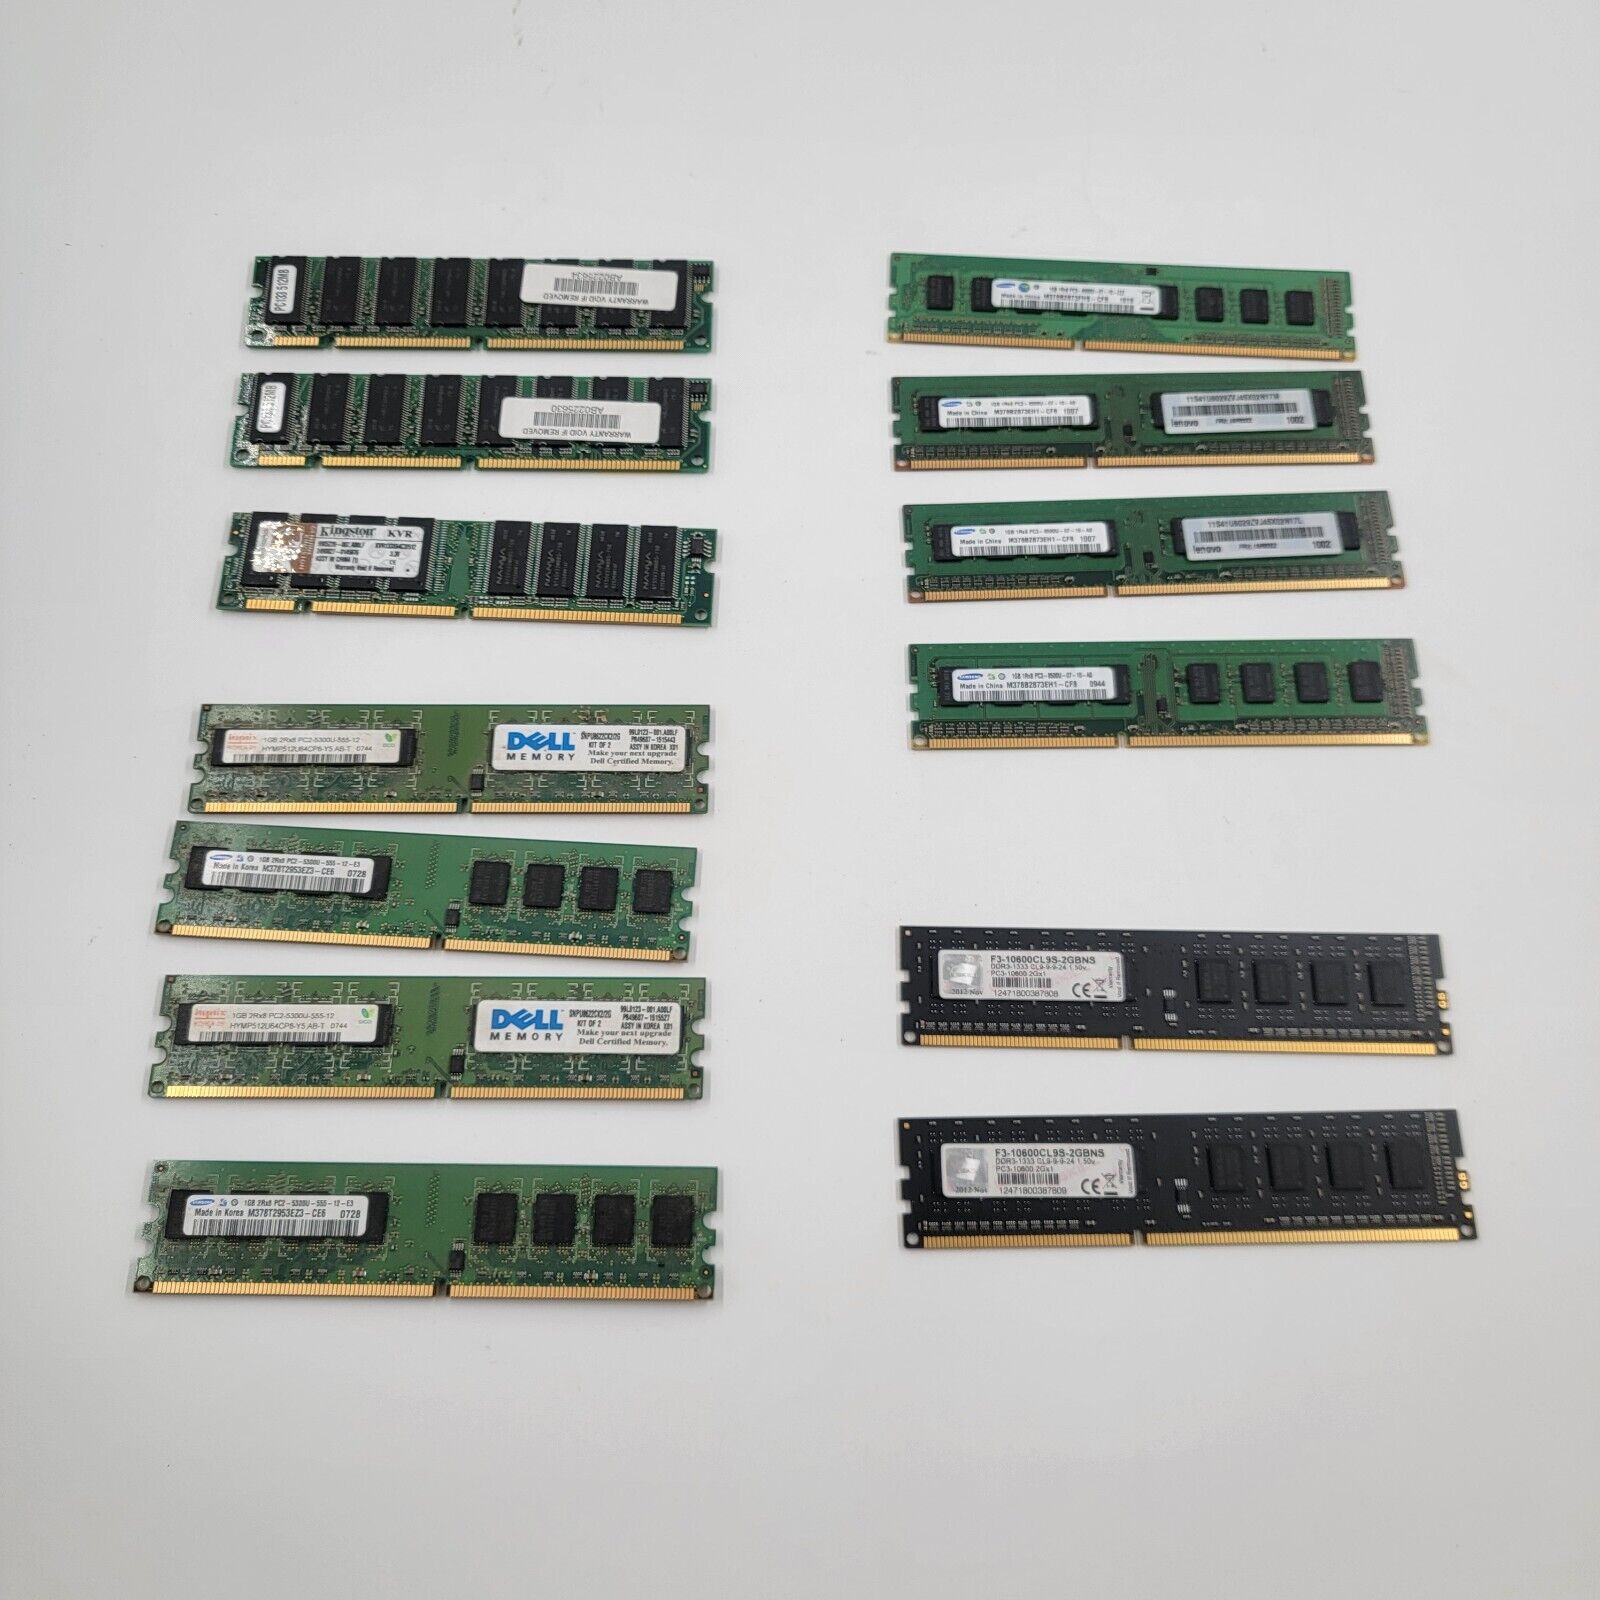 Lot of 13 - 1 GB and 2 GB Computer Ram Sticks